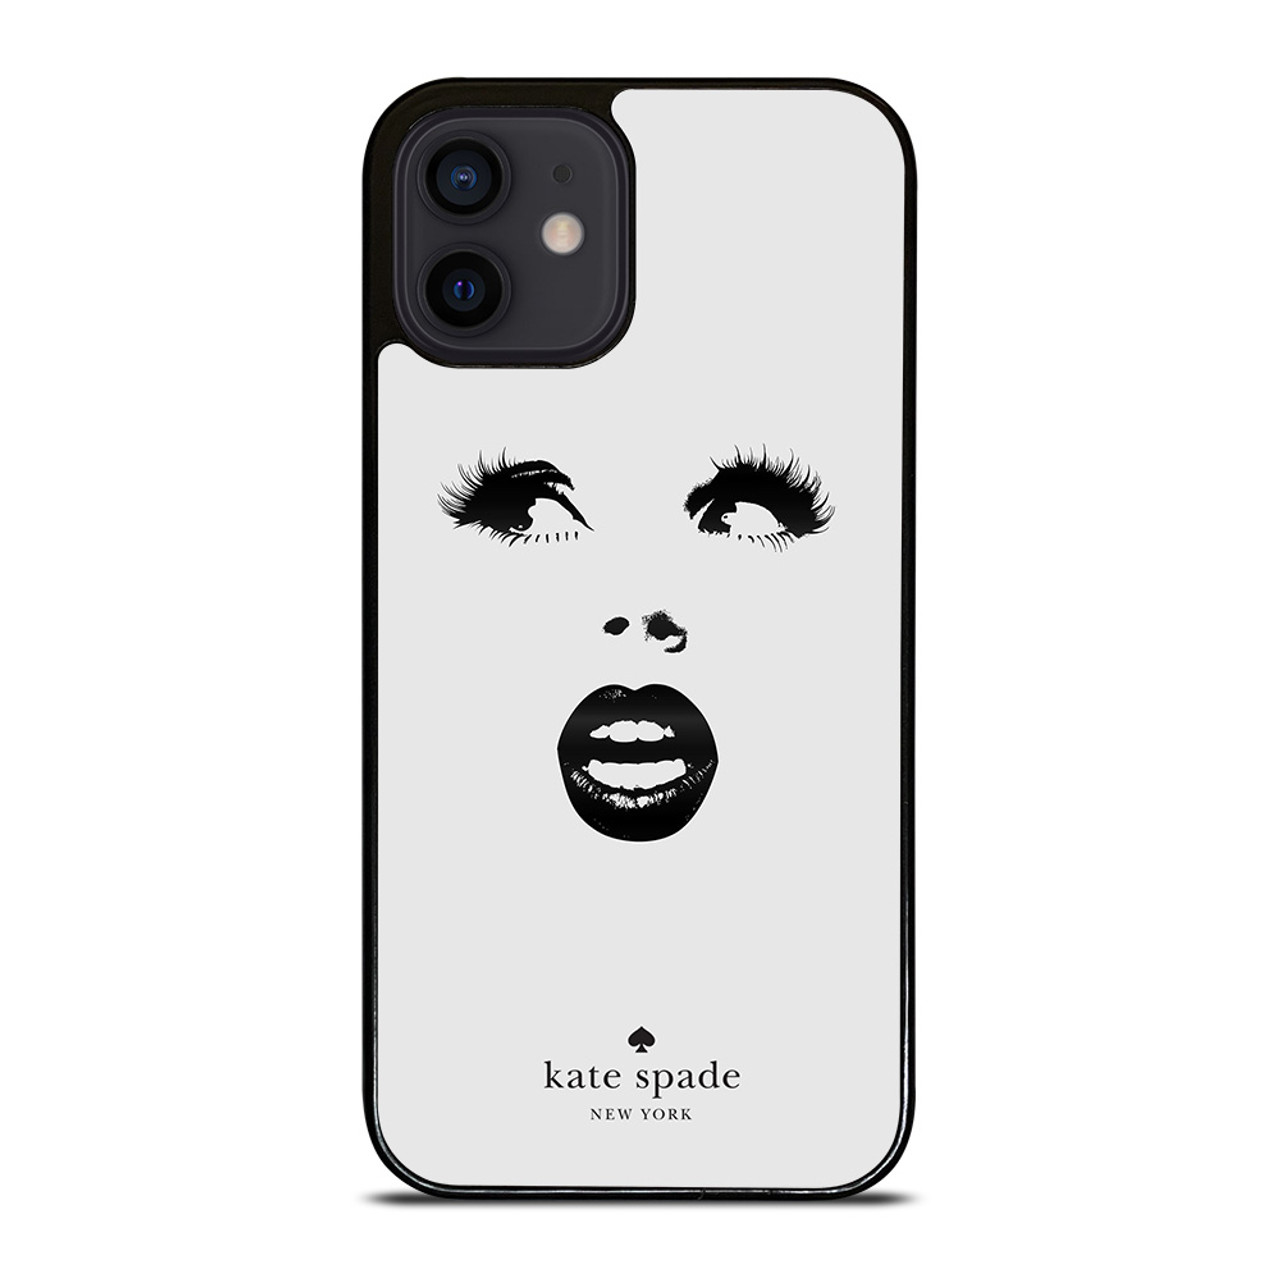 KATE SPADE BLACK WHITE FACE iPhone 12 Mini Case Cover